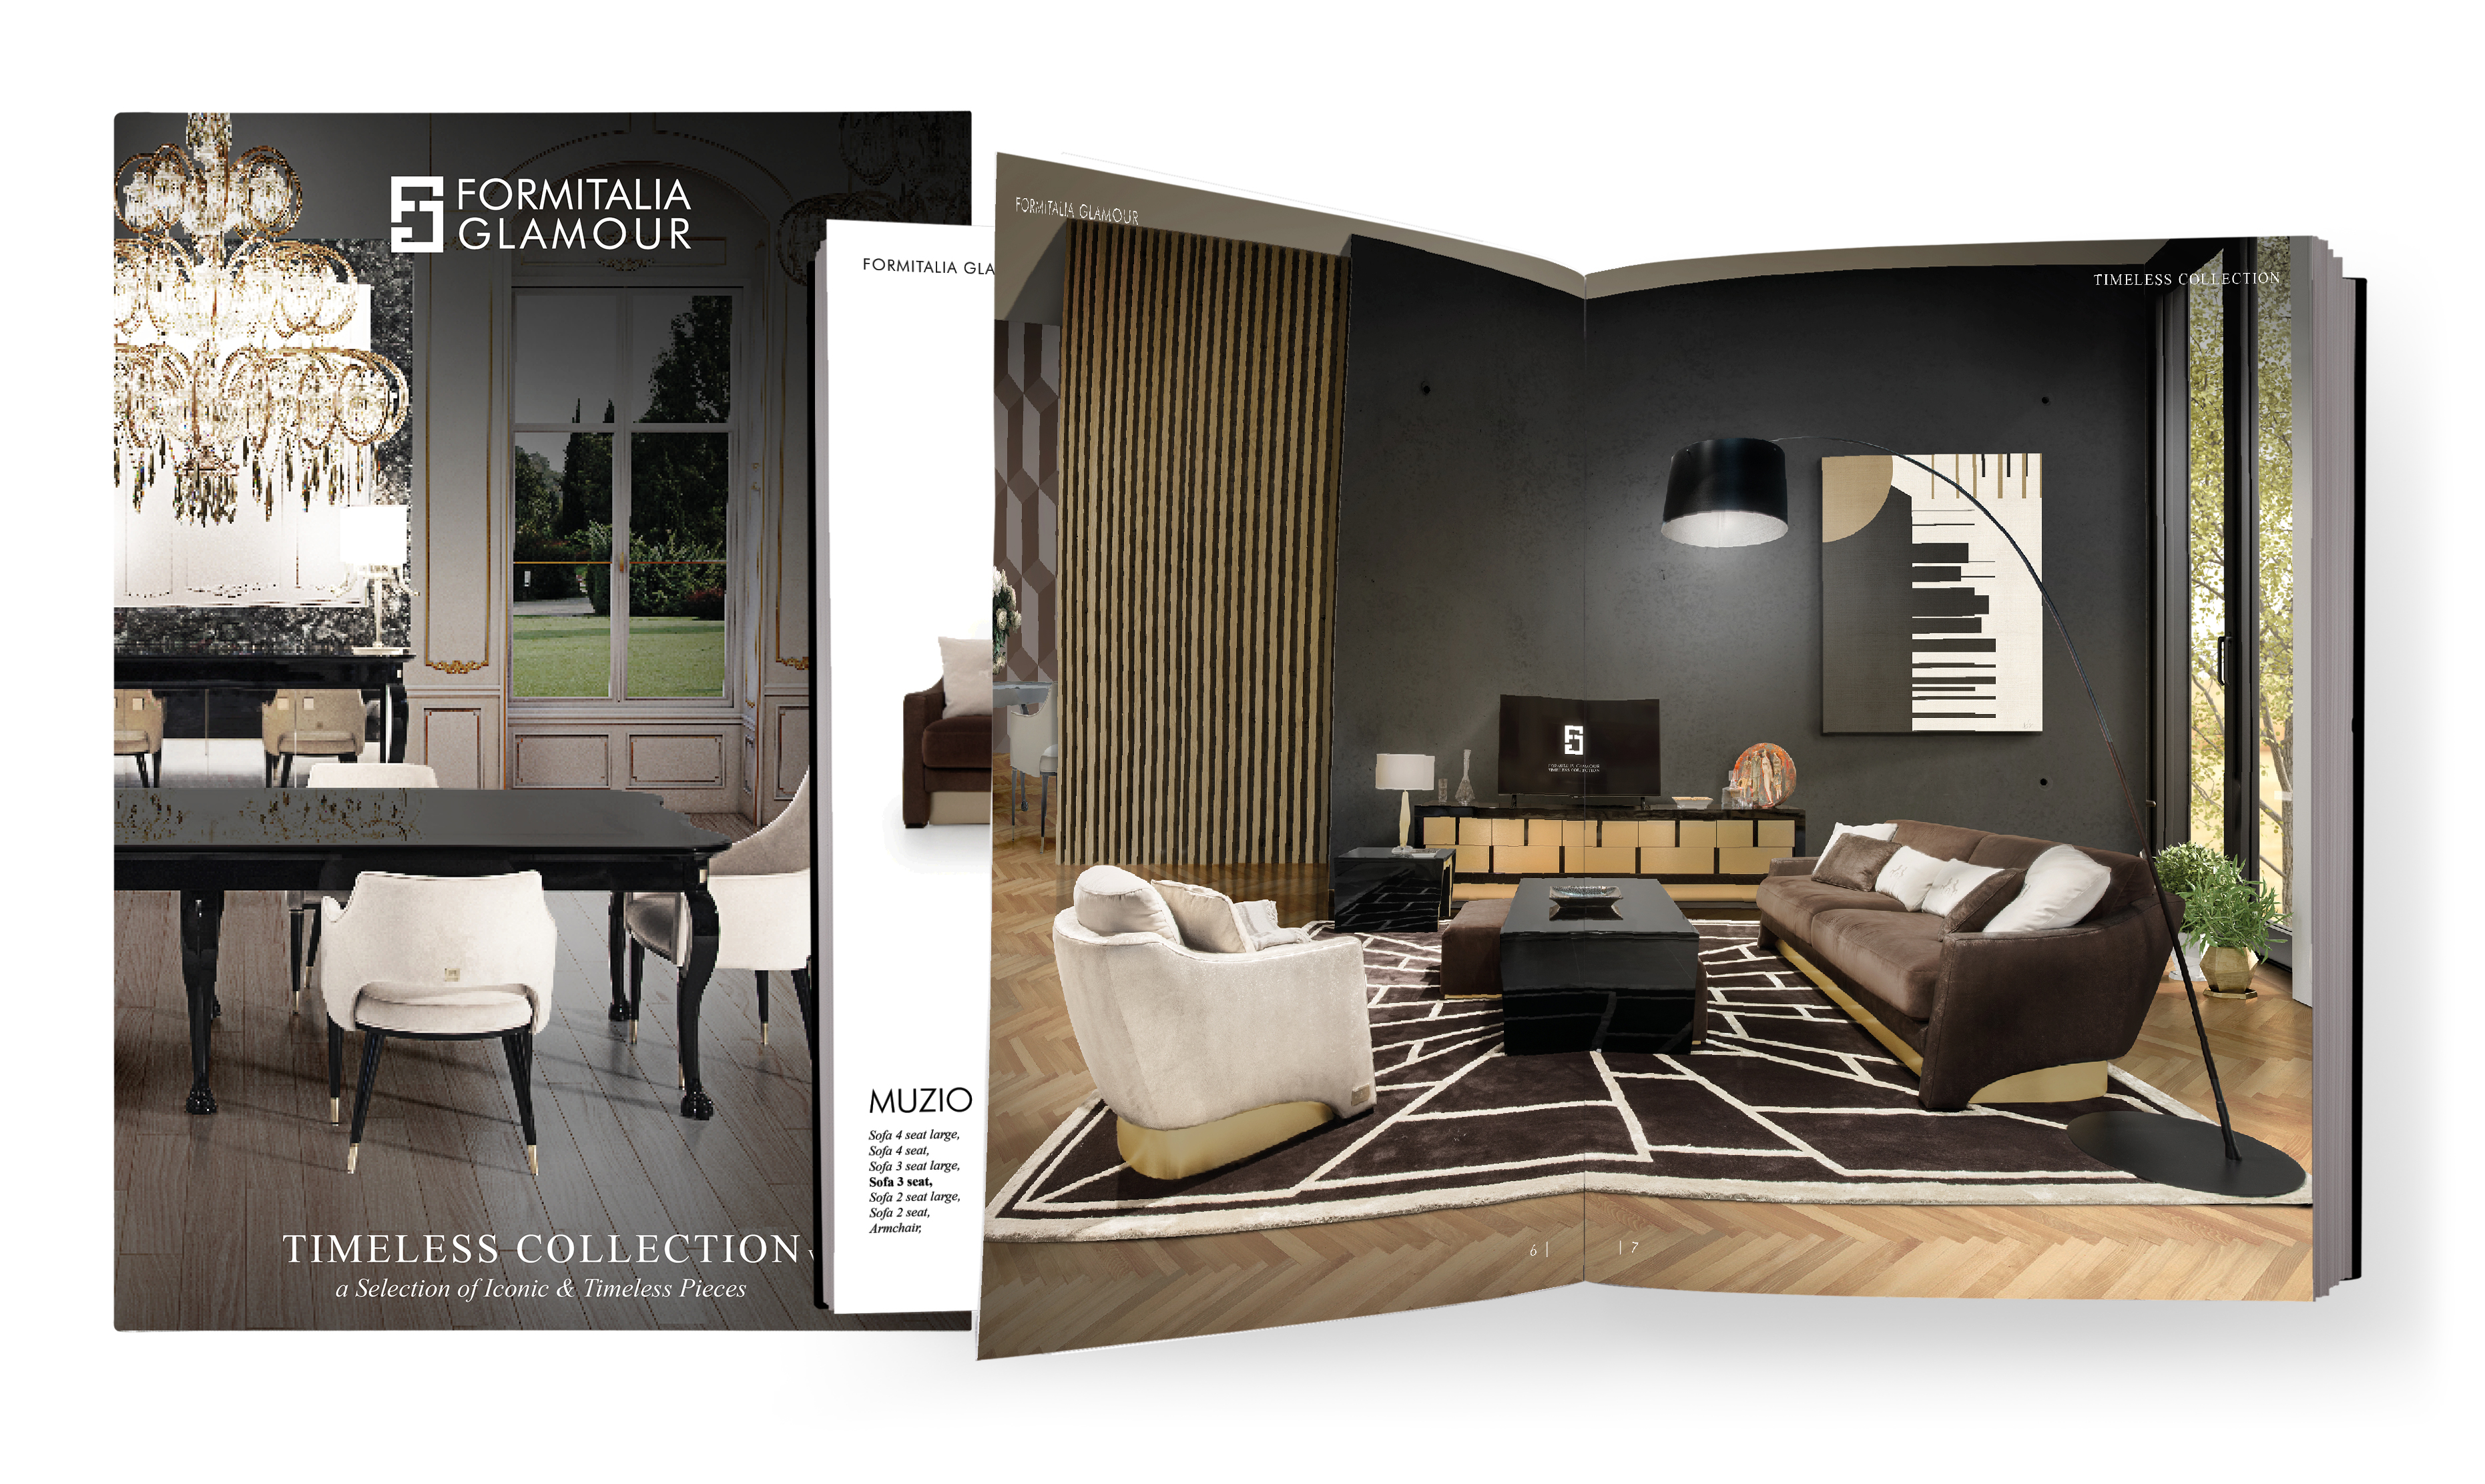 FORMITALIA Glamour Timeless Collection Luxury interior